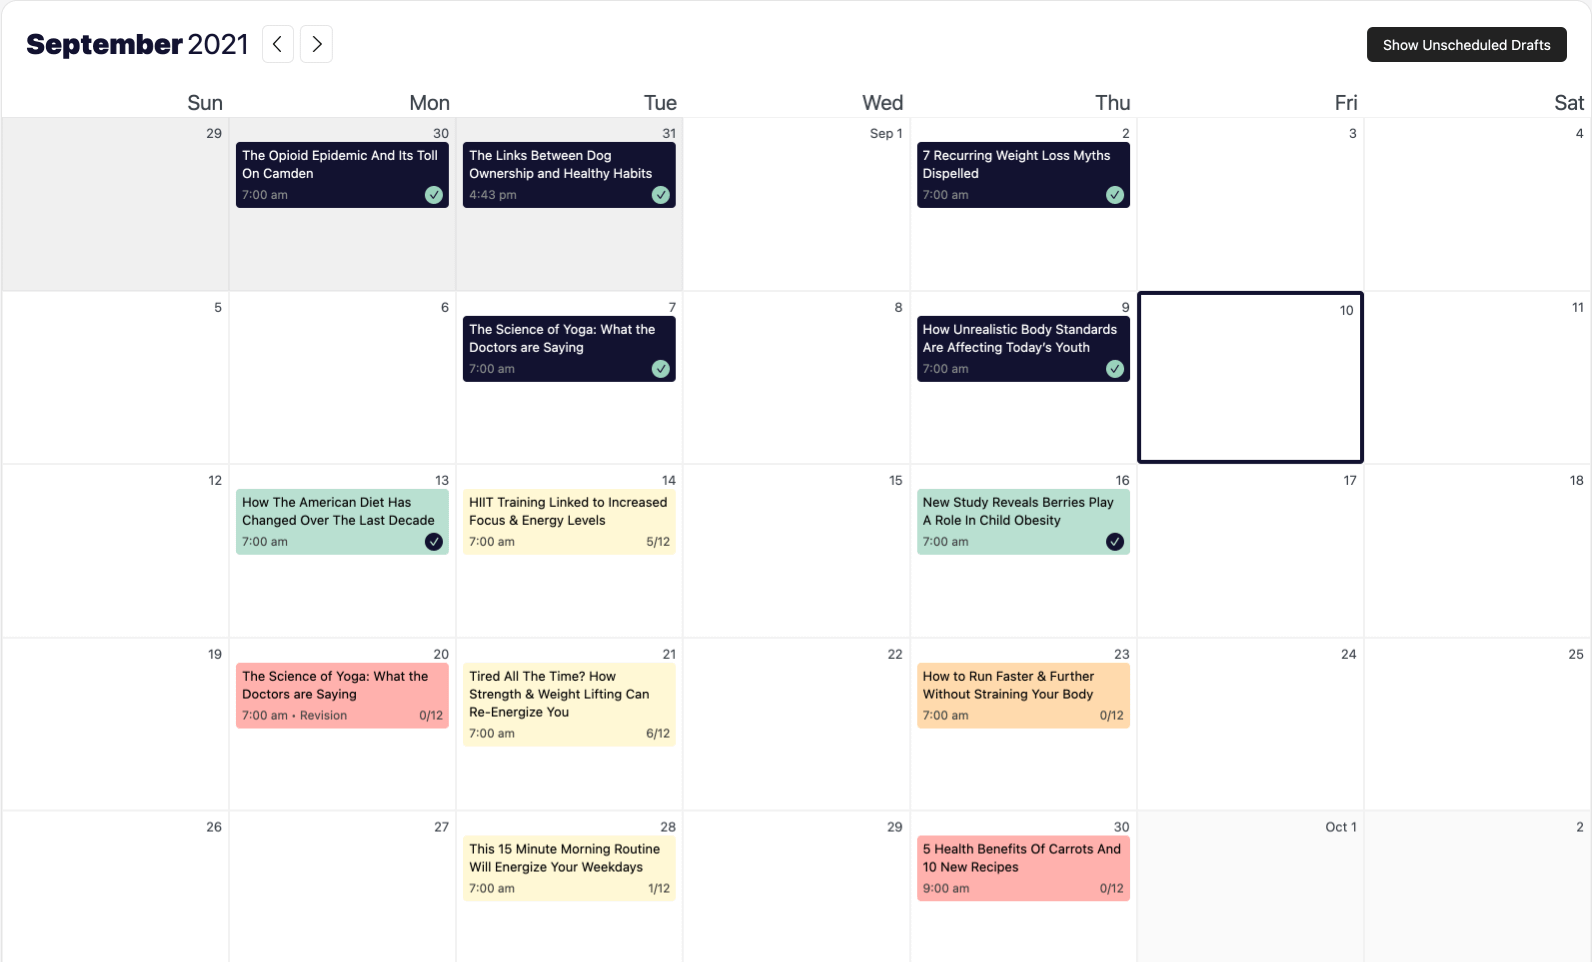 Strive's content calendar